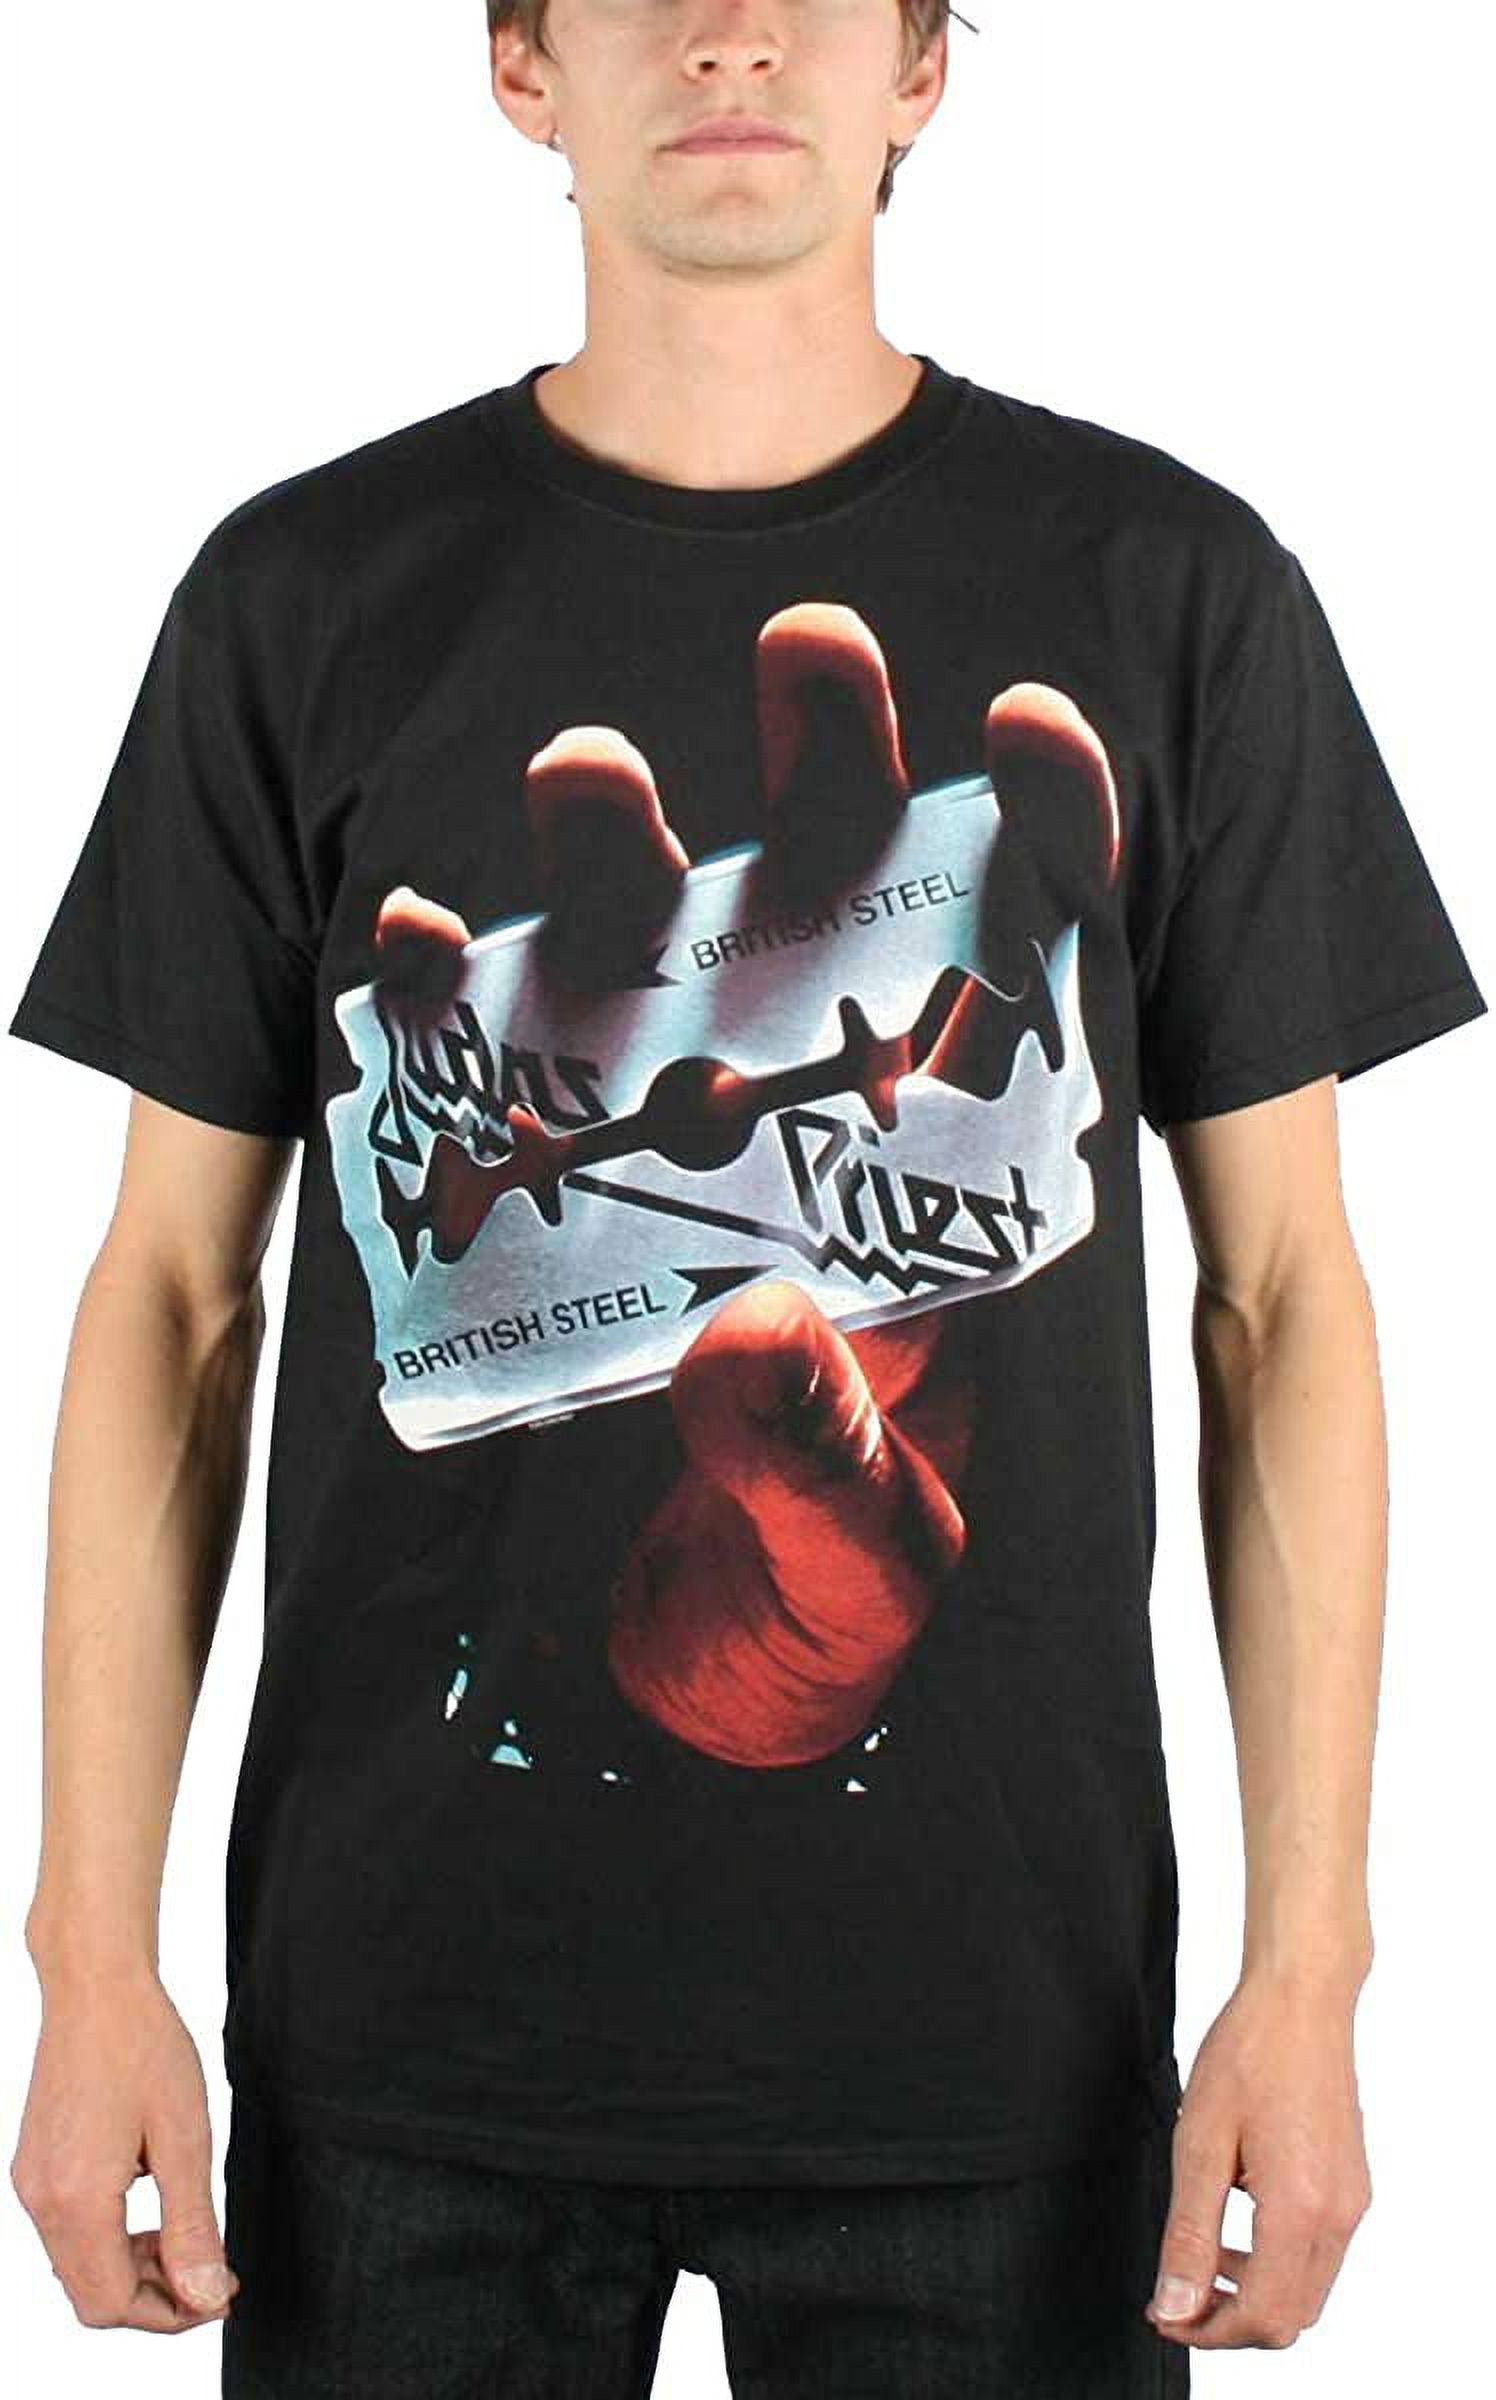 Judas Priest - British Steel Mens T Shirt - image 1 of 2